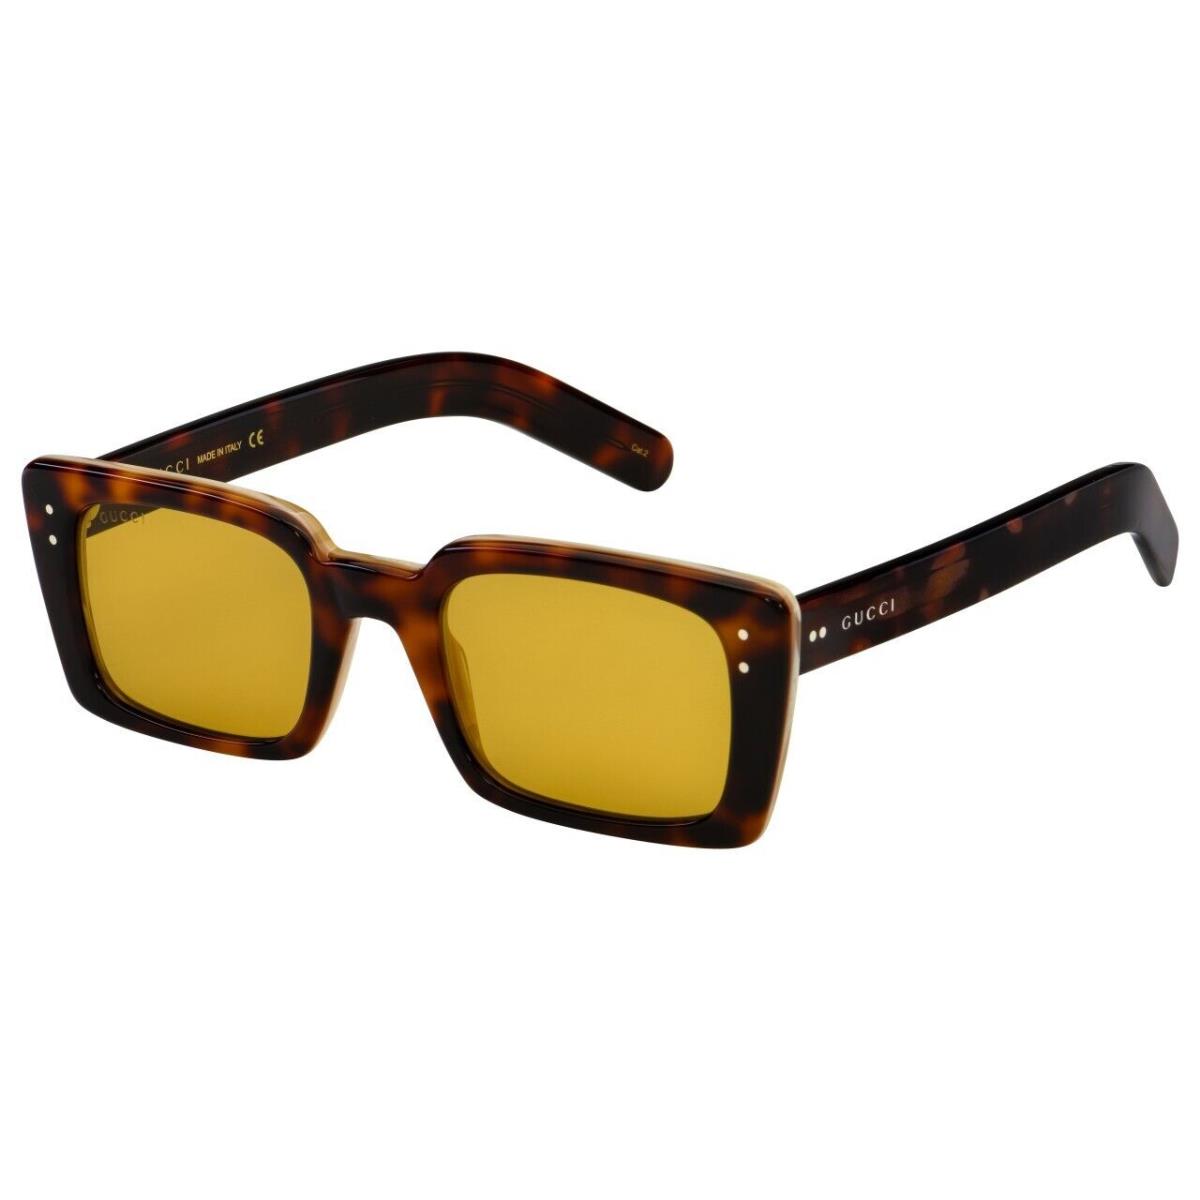 Gucci Sunglasses GG0539S 004 Havana Marble Beige/yellow Lens 52mm